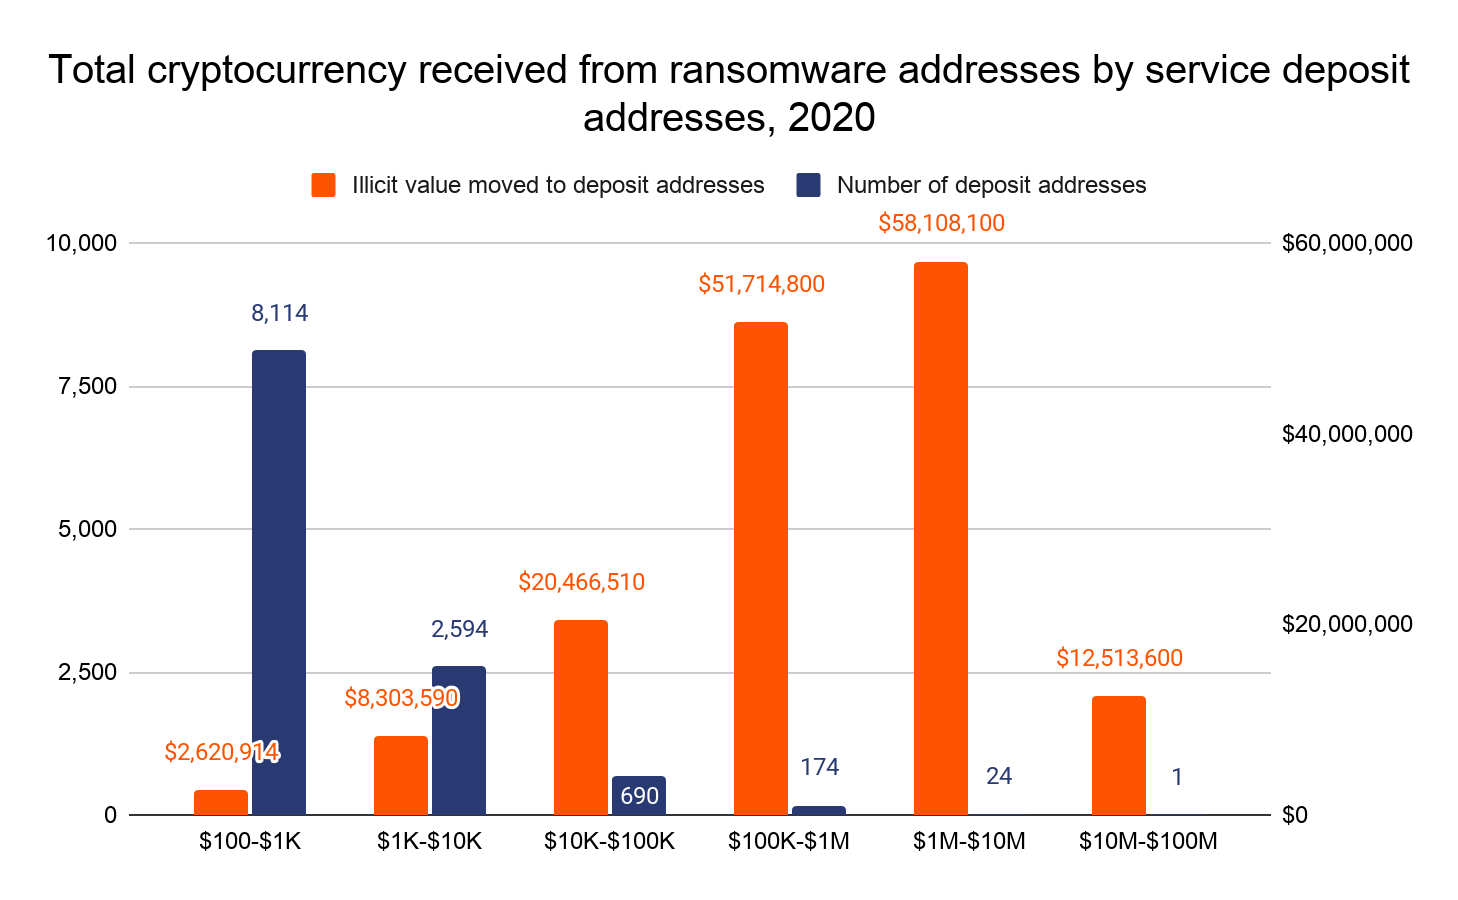 WannaCry analysis: visualizing their ransomware attack